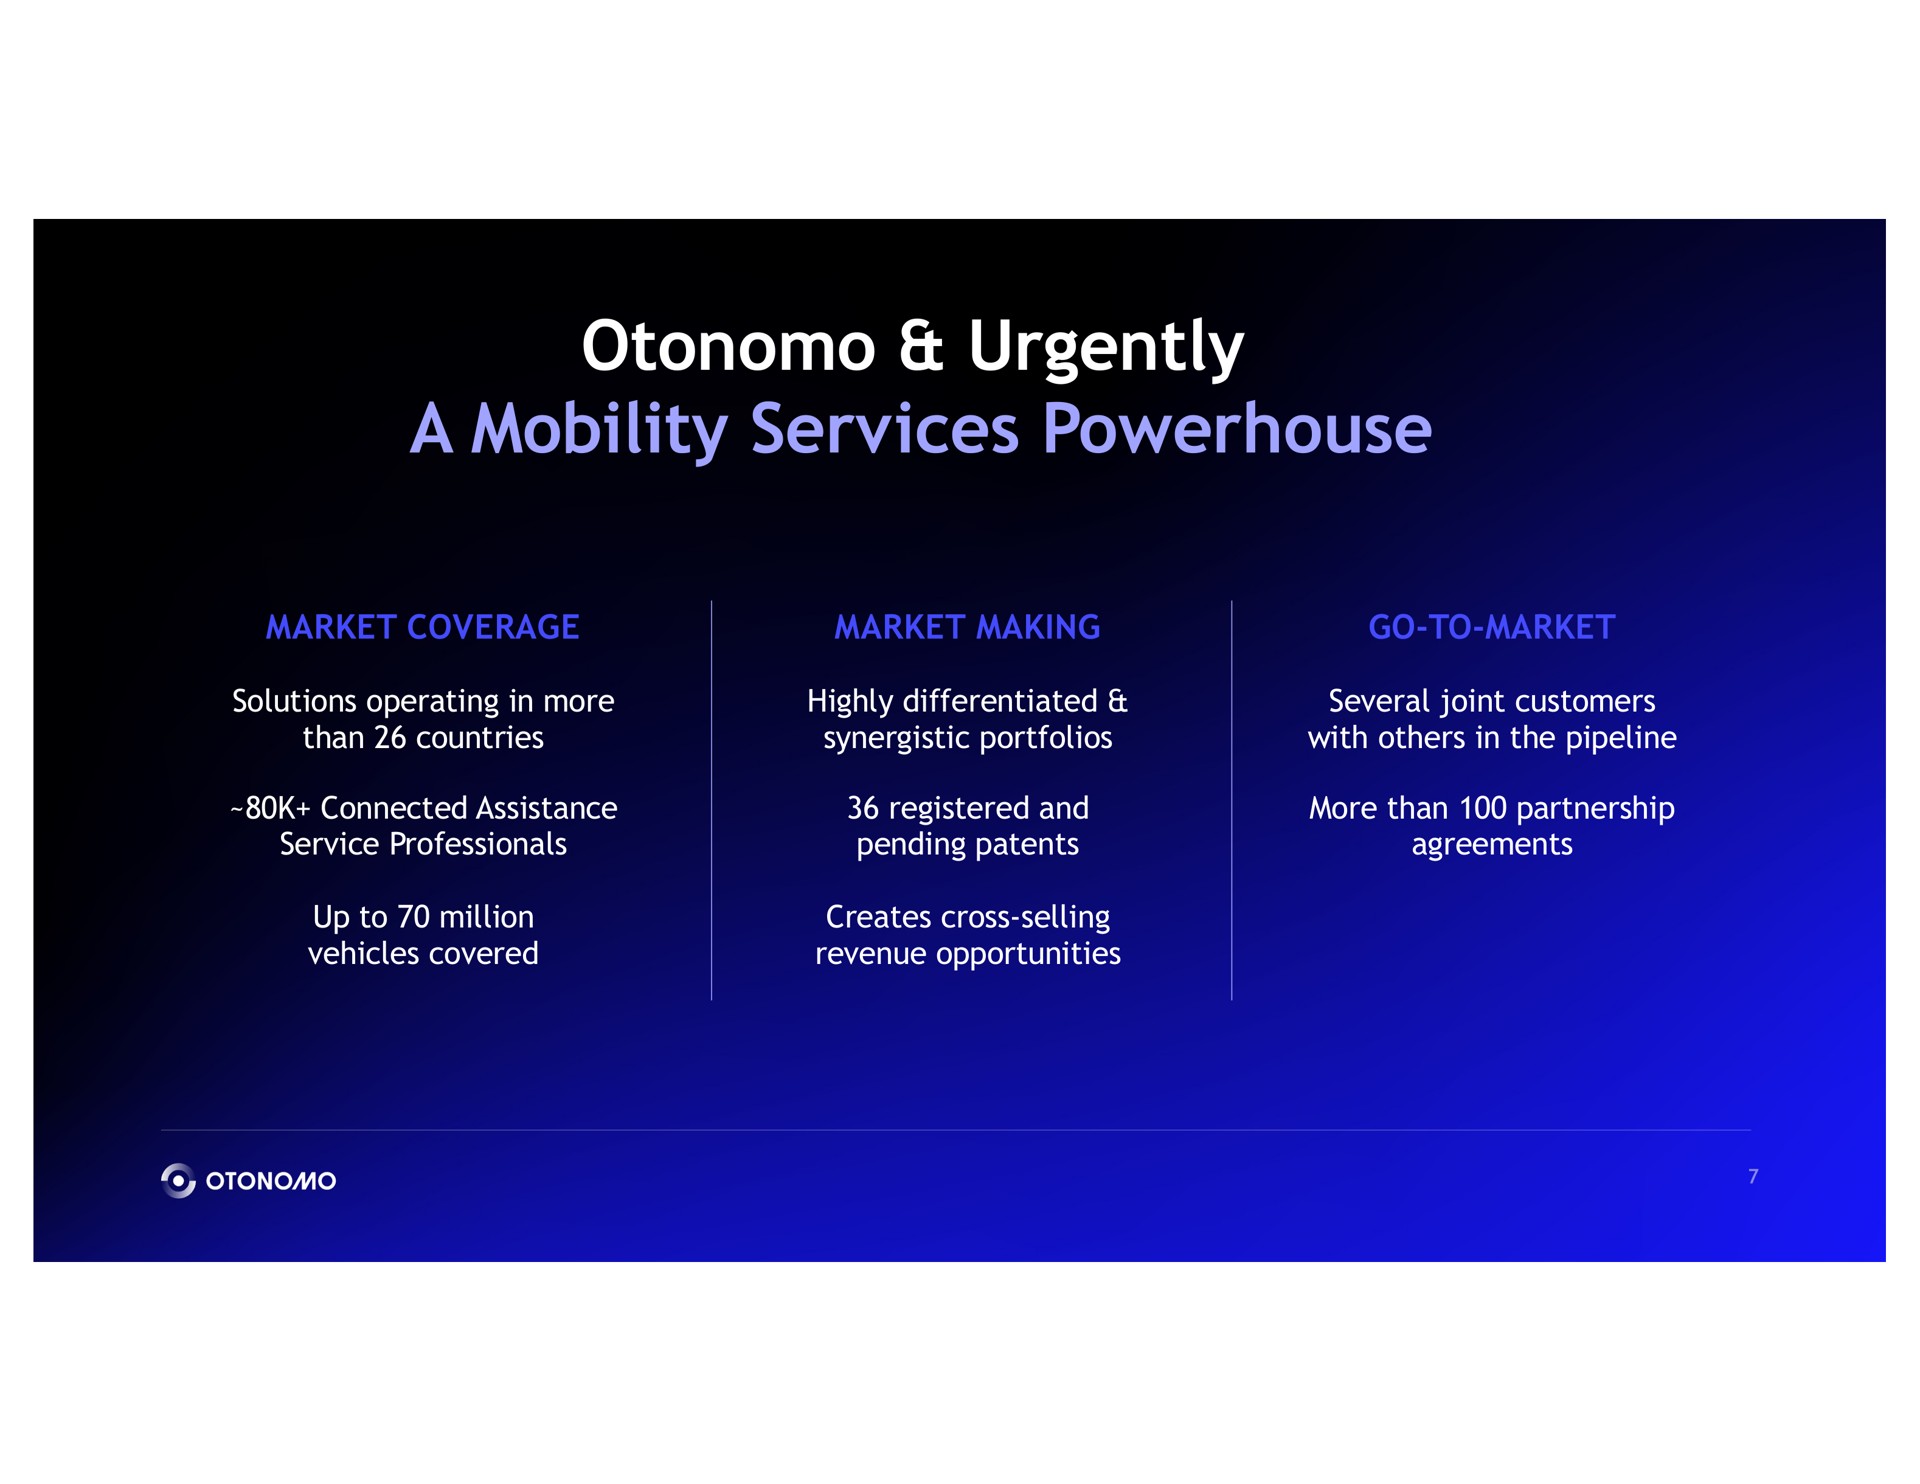 urgently a mobility services powerhouse | Otonomo